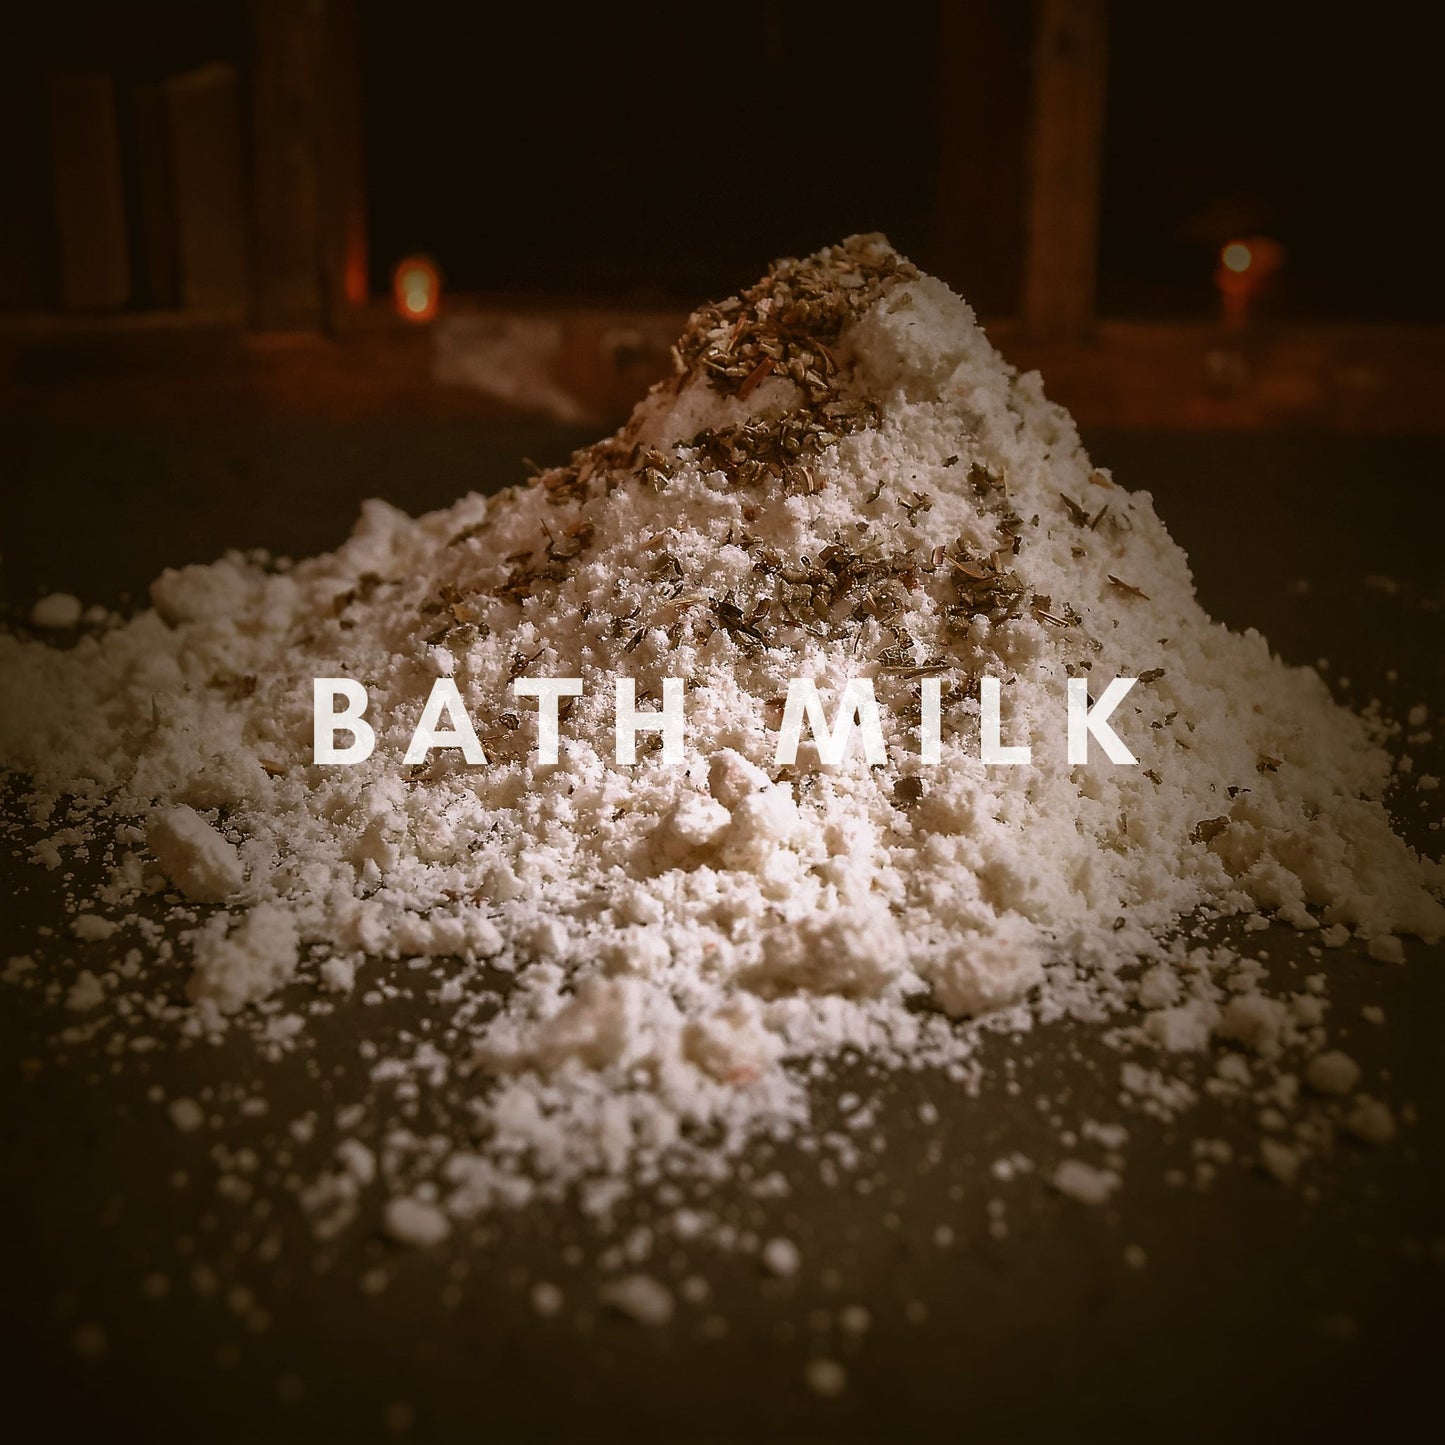 Luxury Bath Milk Recipe with Tutorial